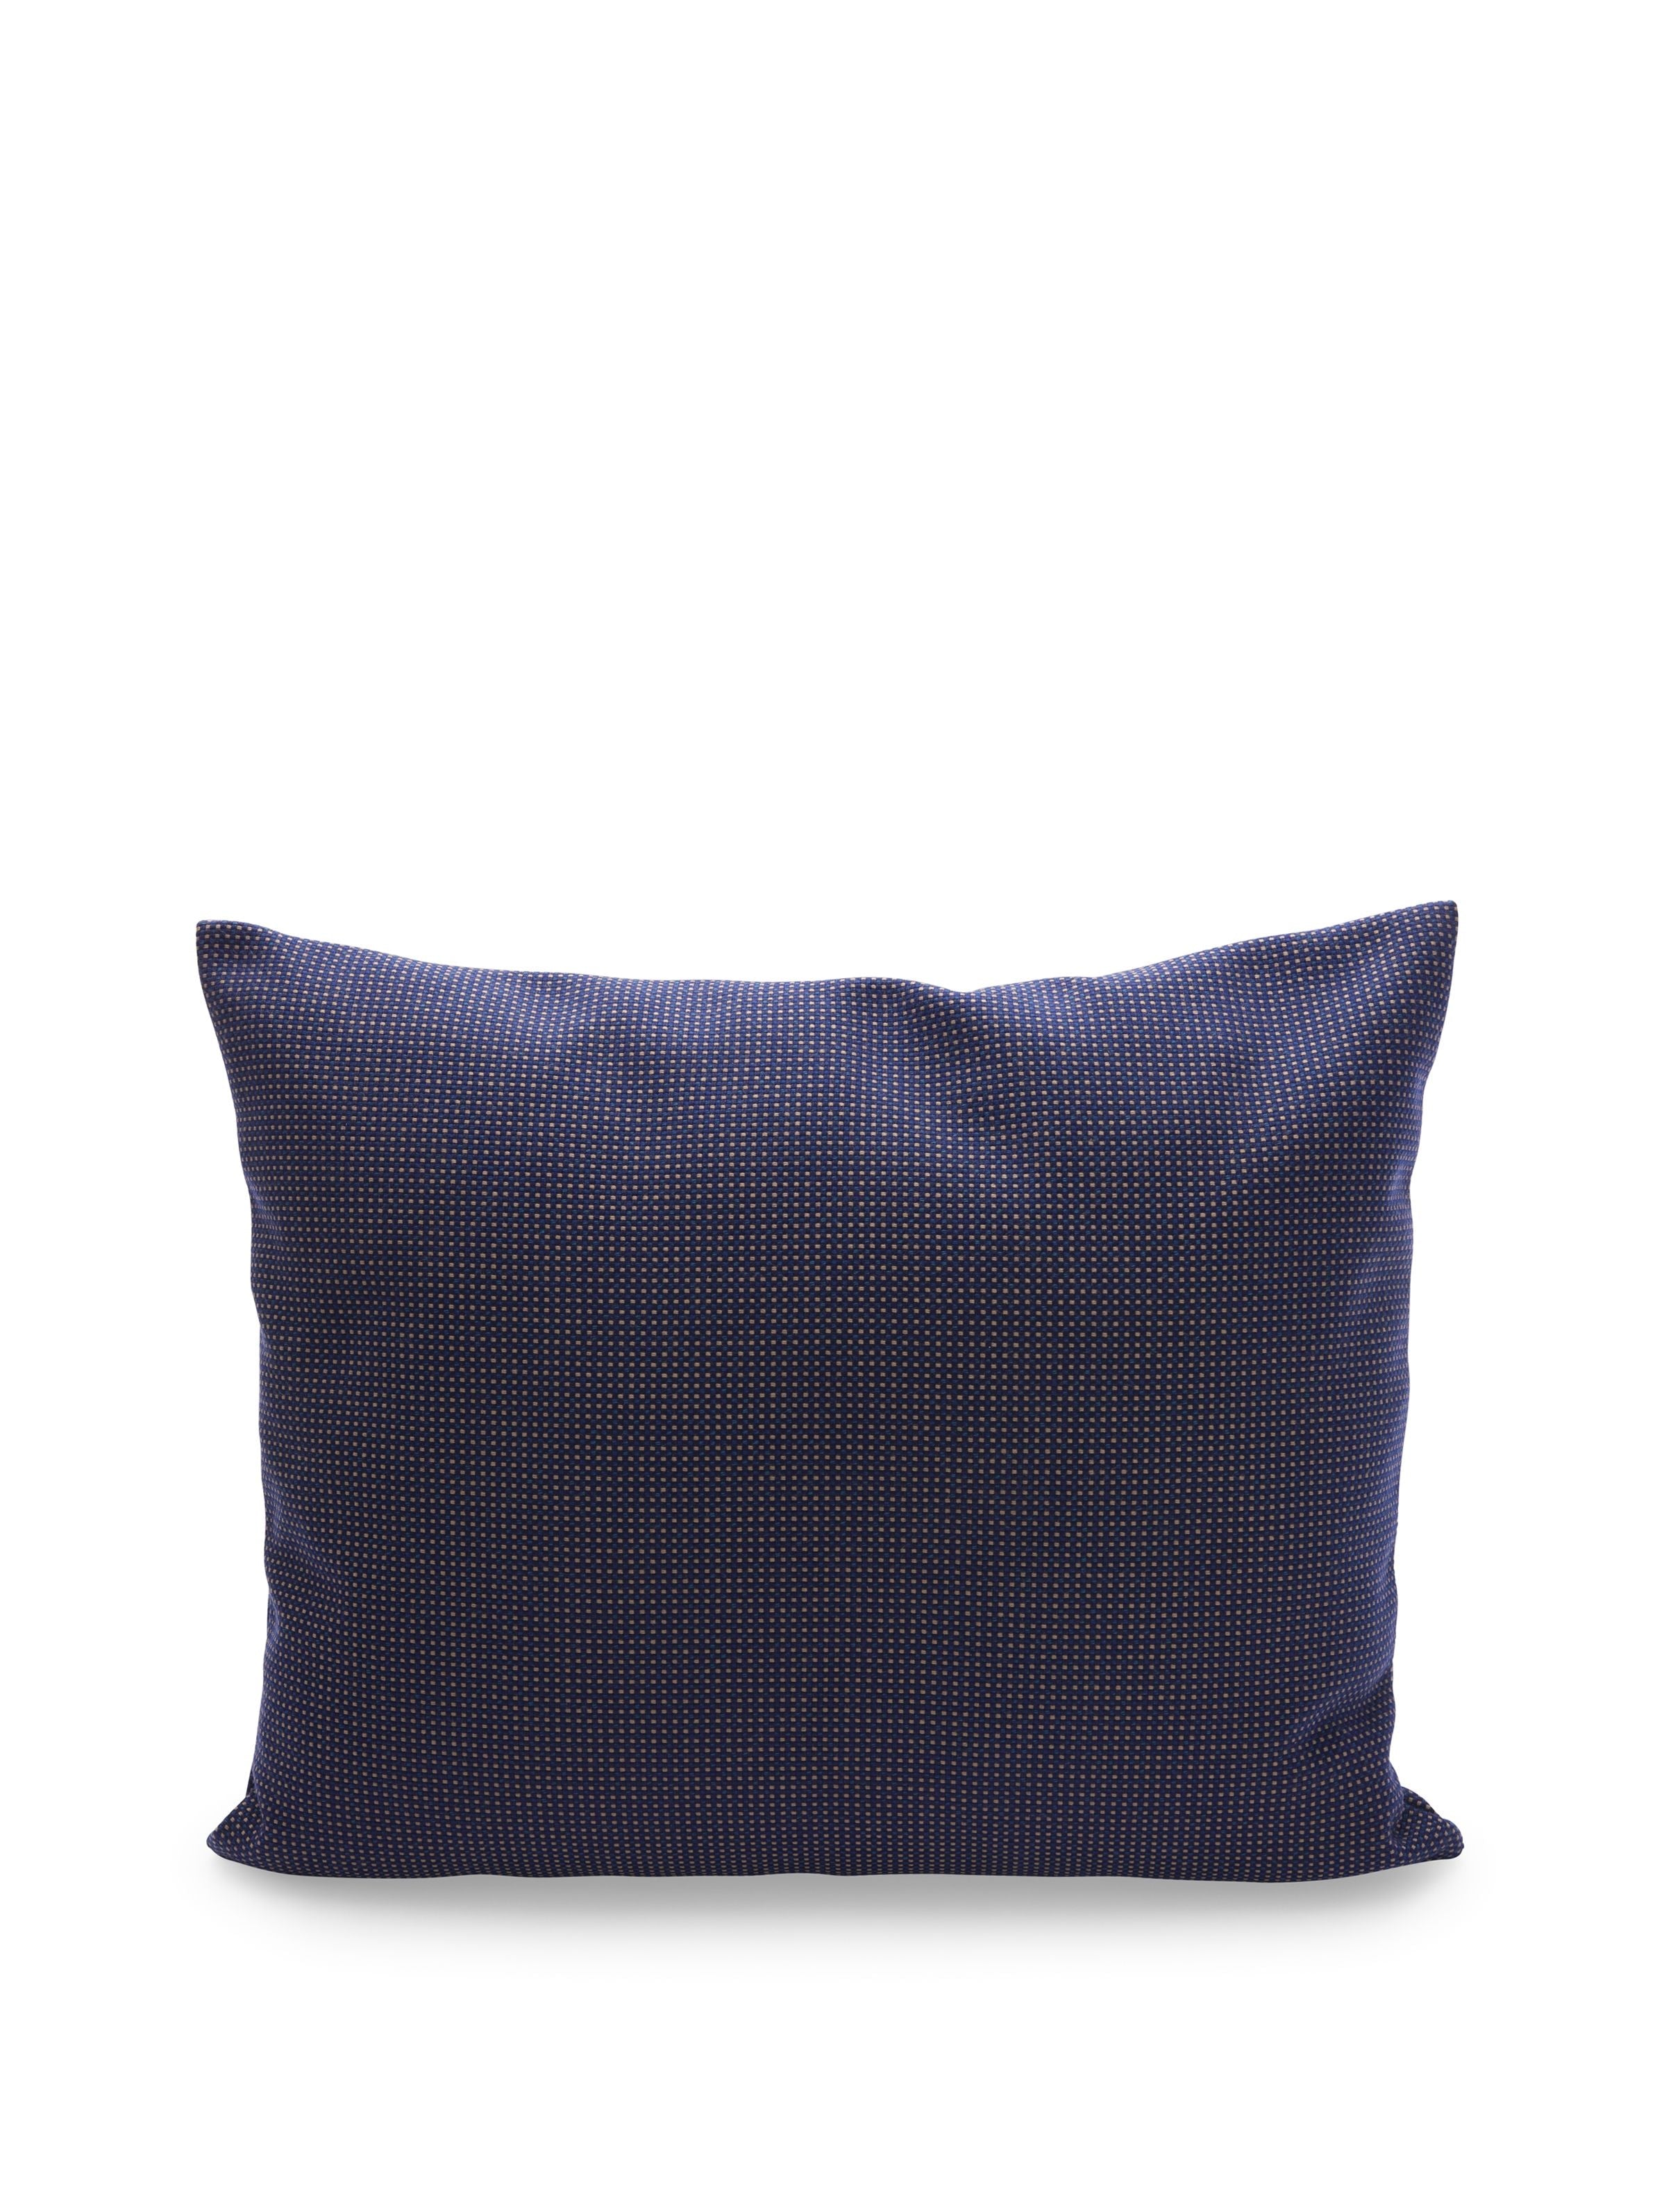 Skagerak Barriere Pillow 60x50 Cm, Dark Blue/Sand Checker